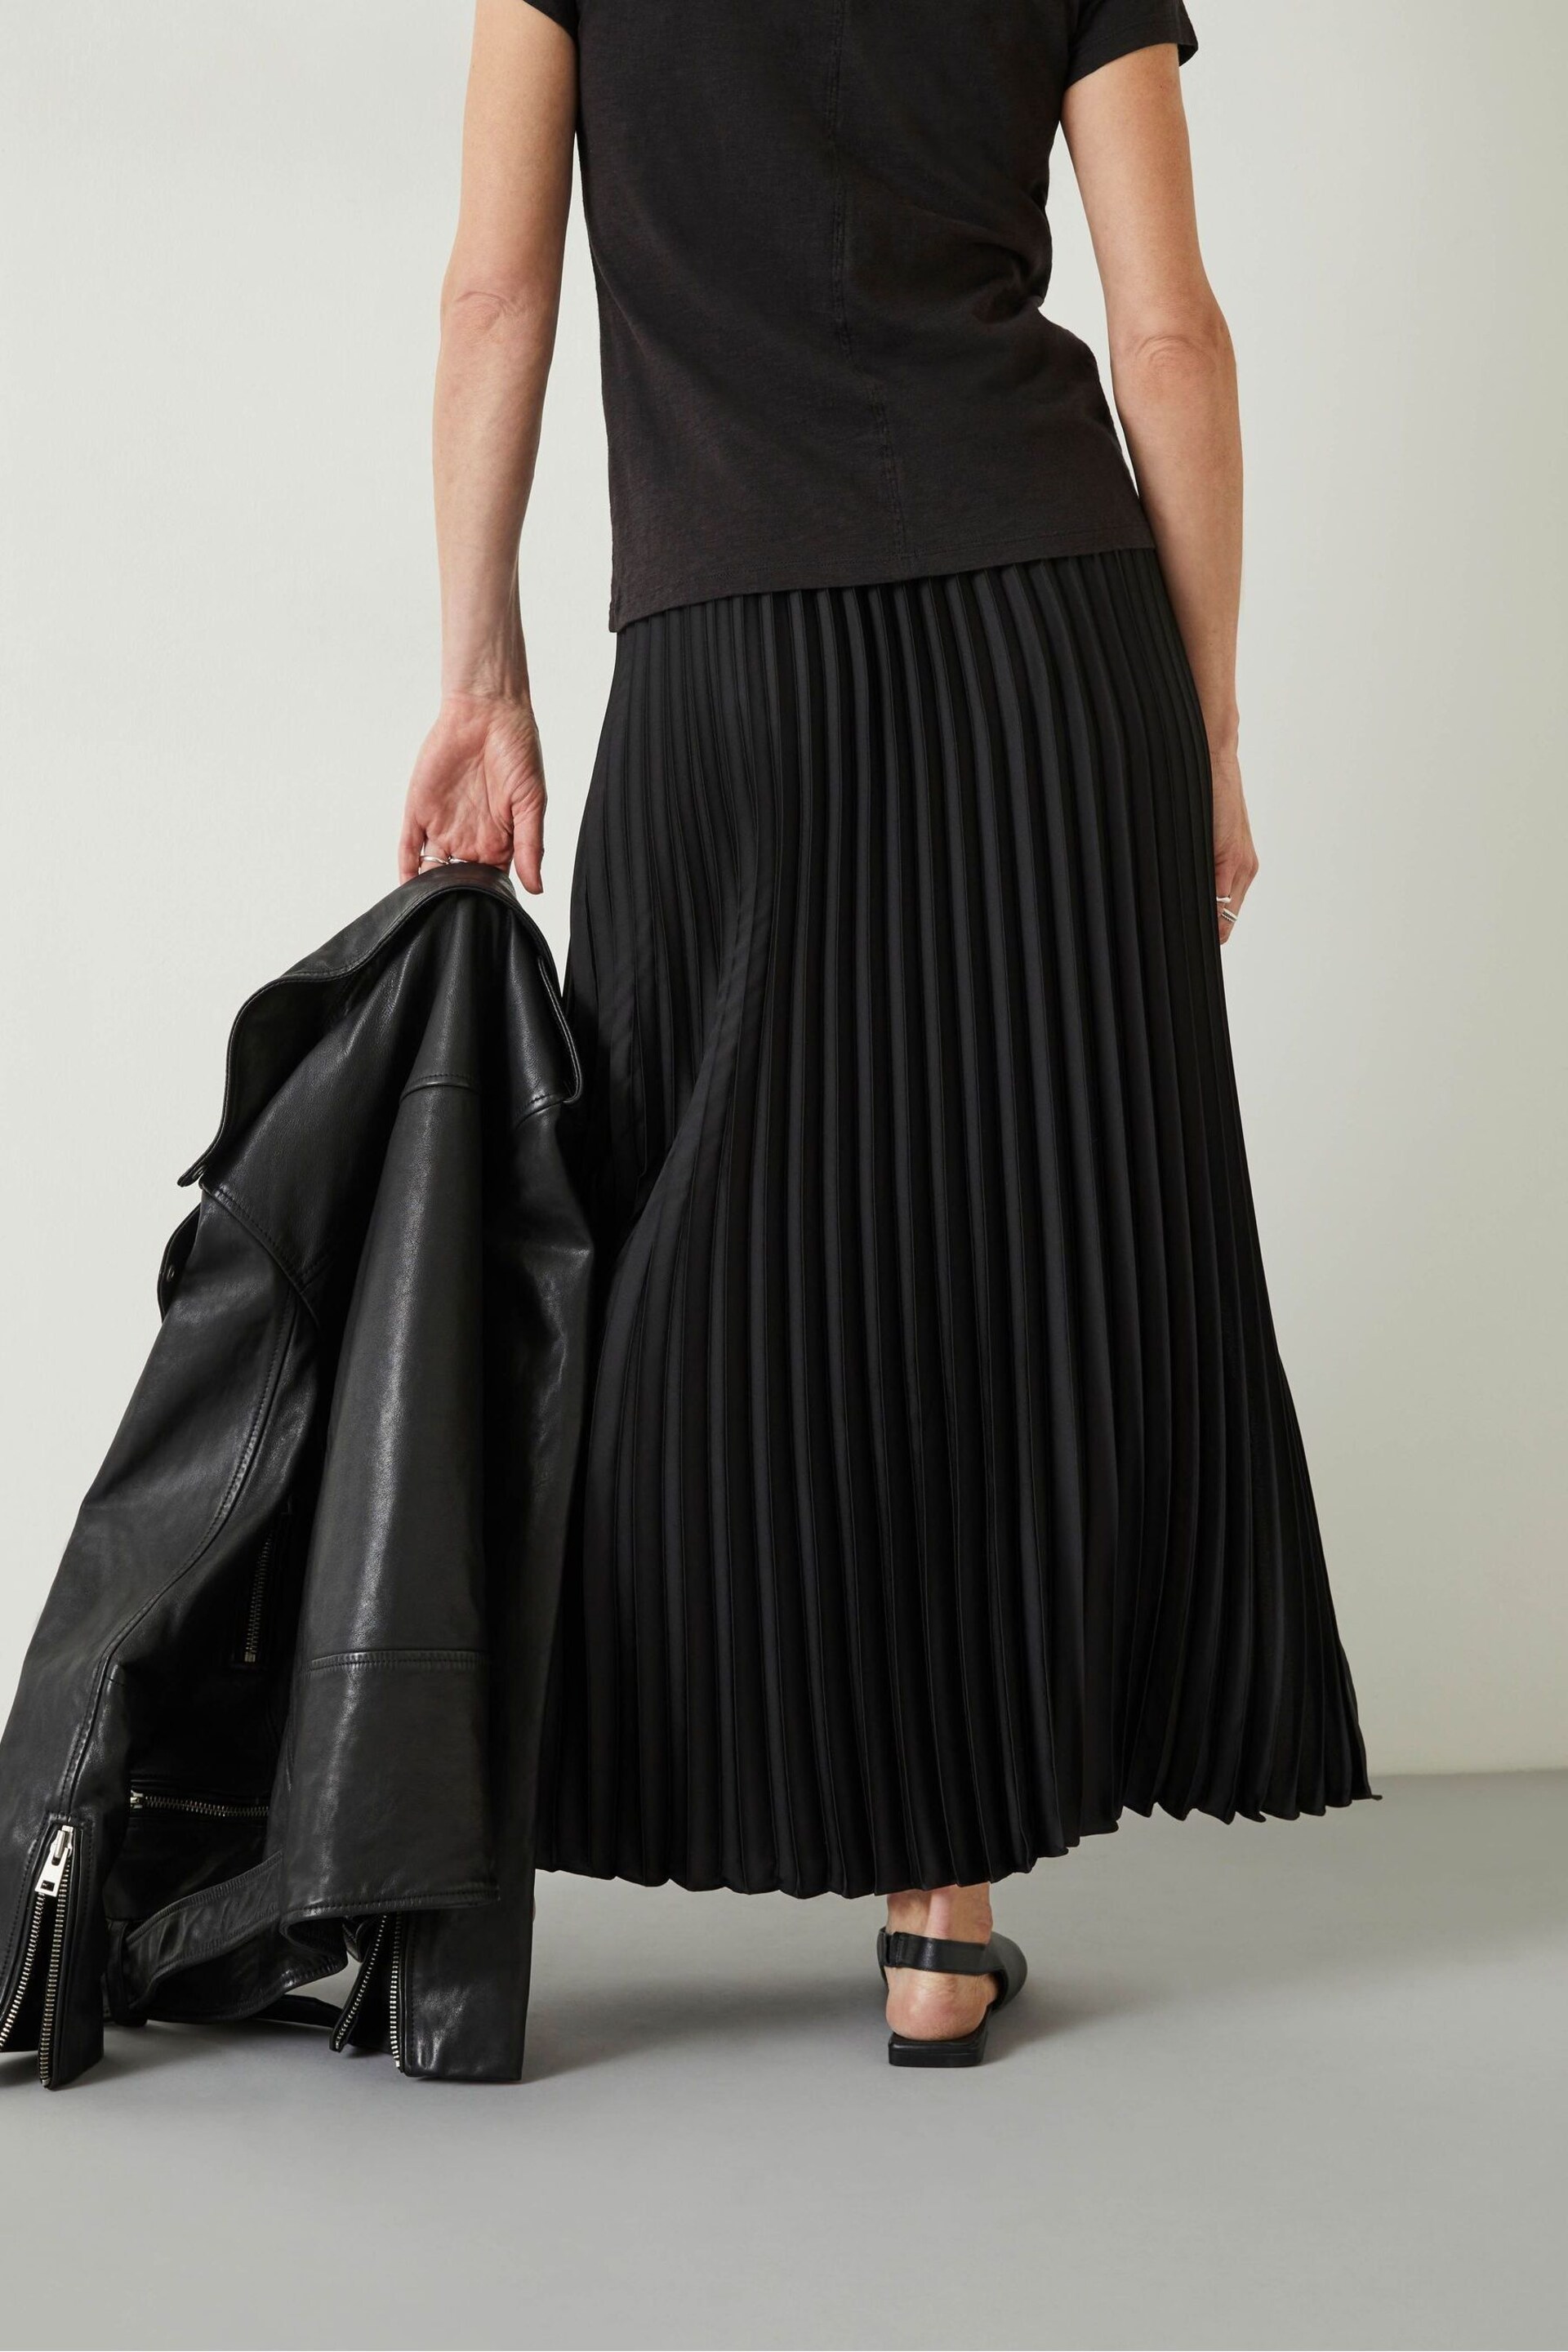 Hush Black Pleated Satin Maxi Skirt - Image 2 of 5